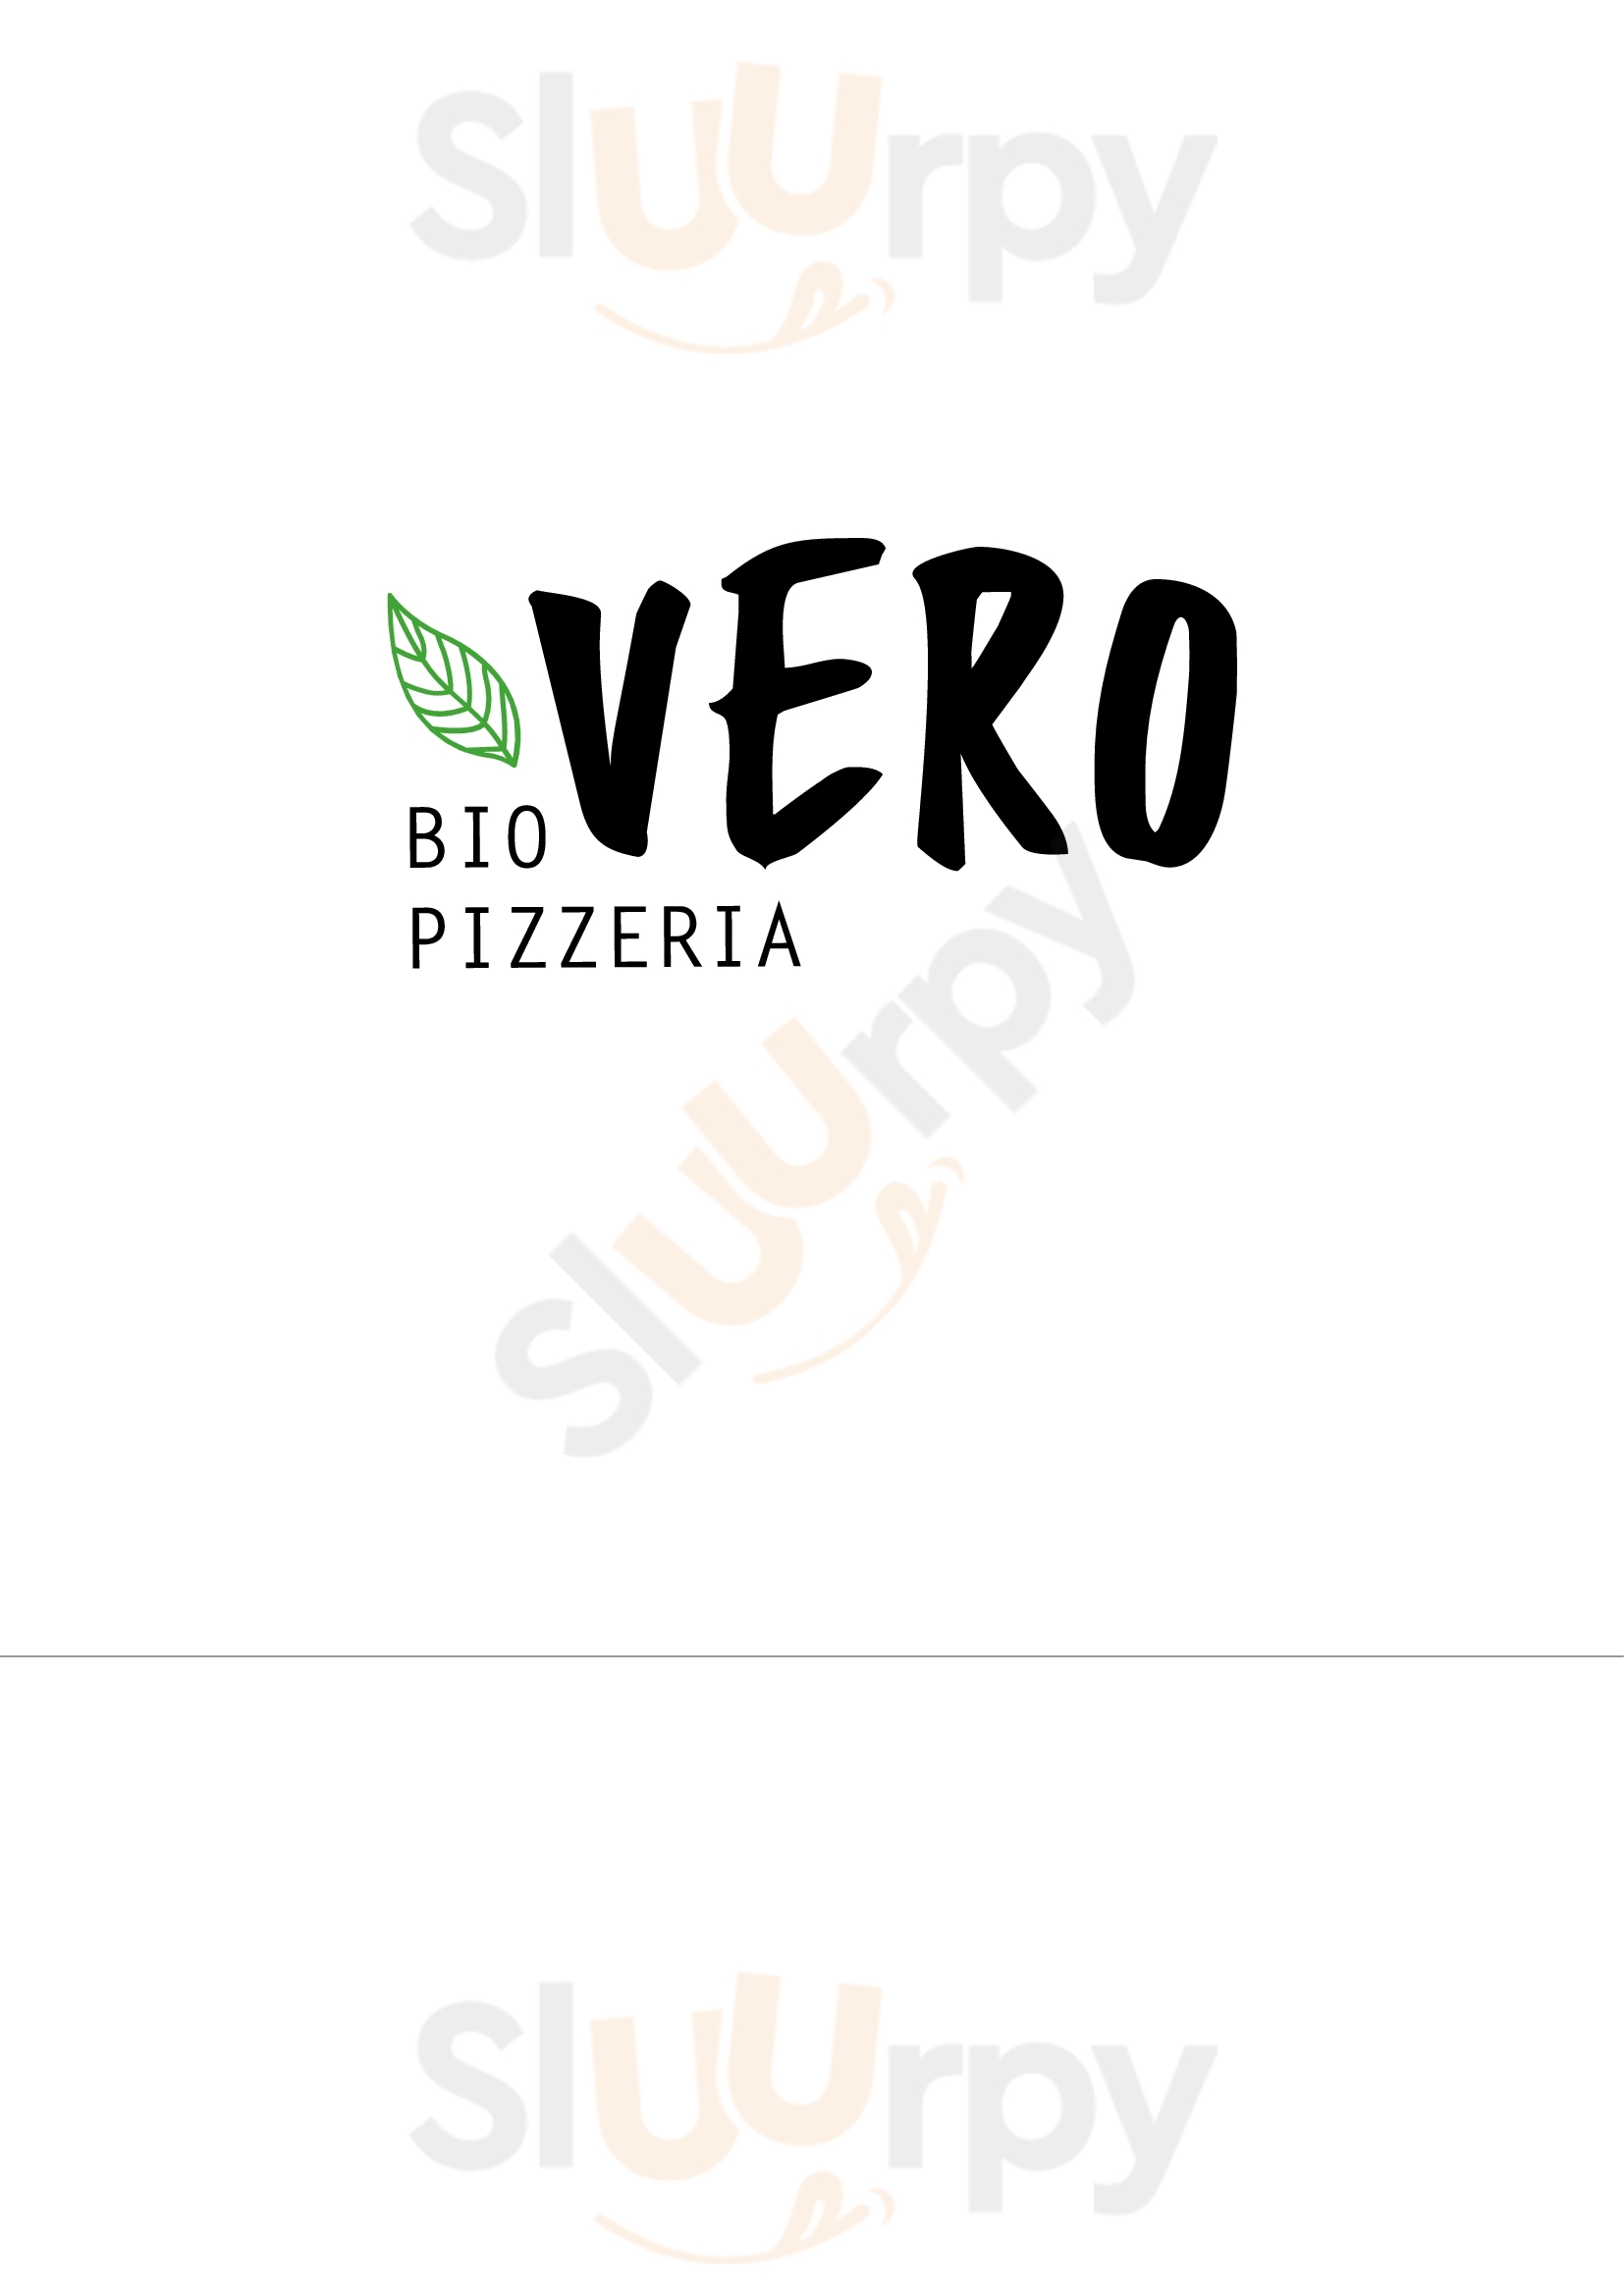 Bio Pizzeria Vero Wien Menu - 1